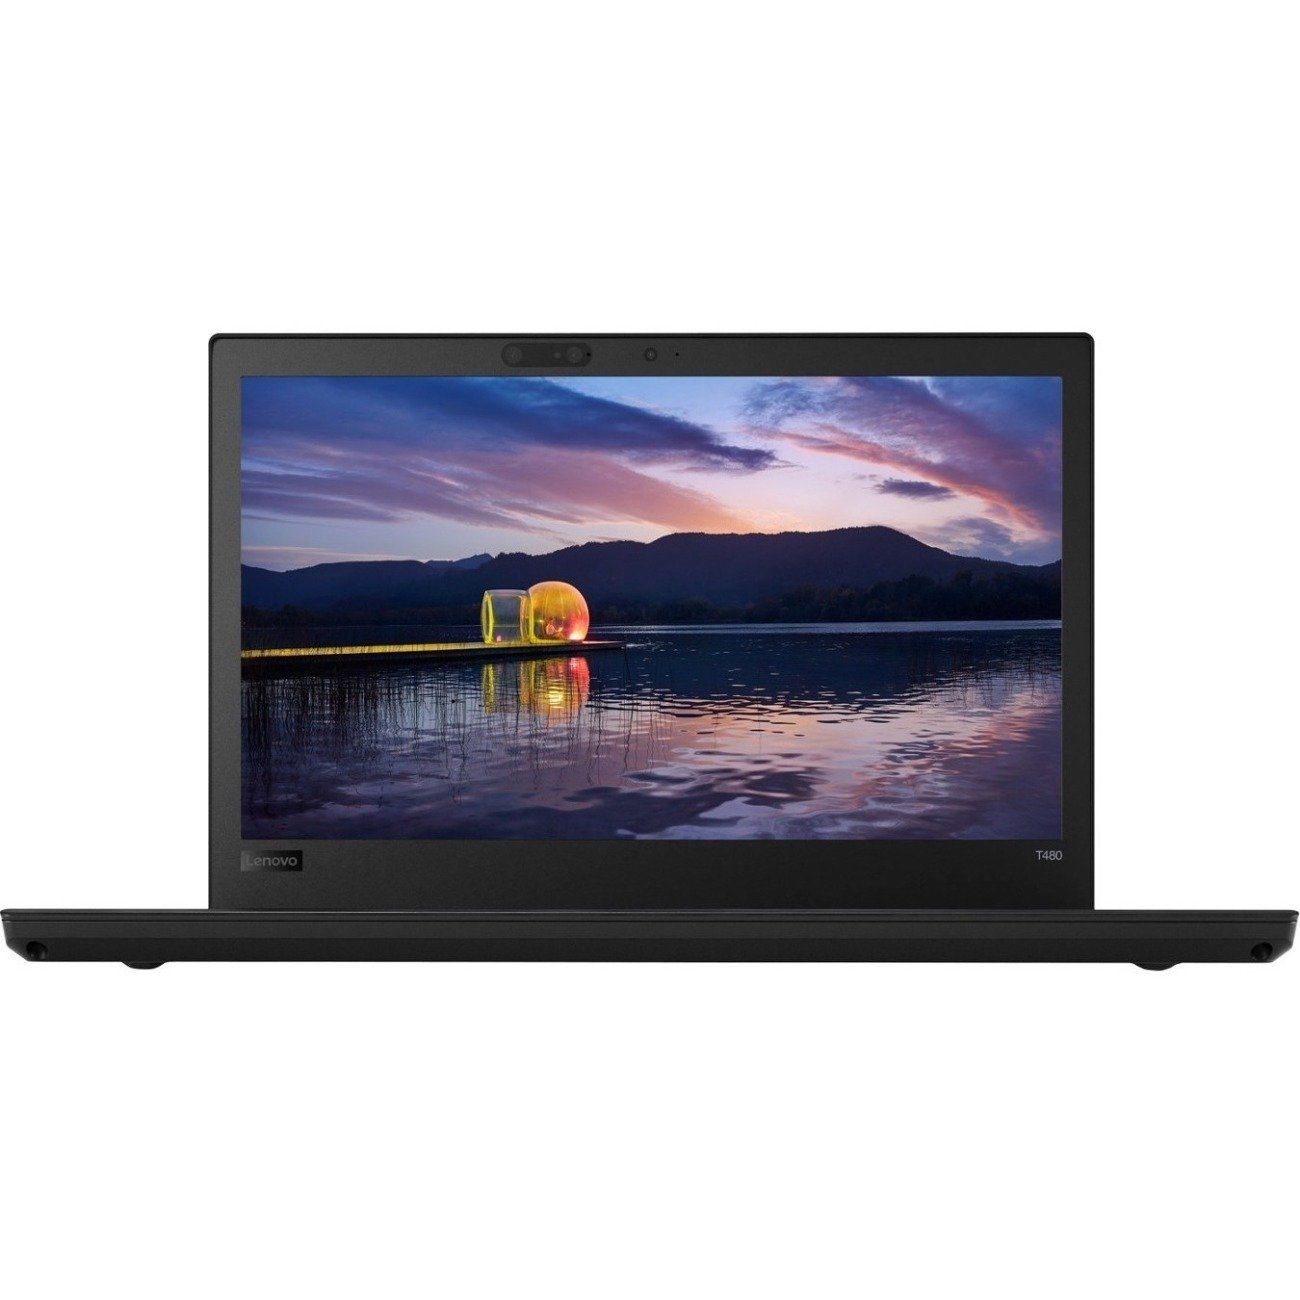 Lenovo ThinkPad T480 20L5000UUS 14″ LCD Notebook – Intel Core i7 (8th